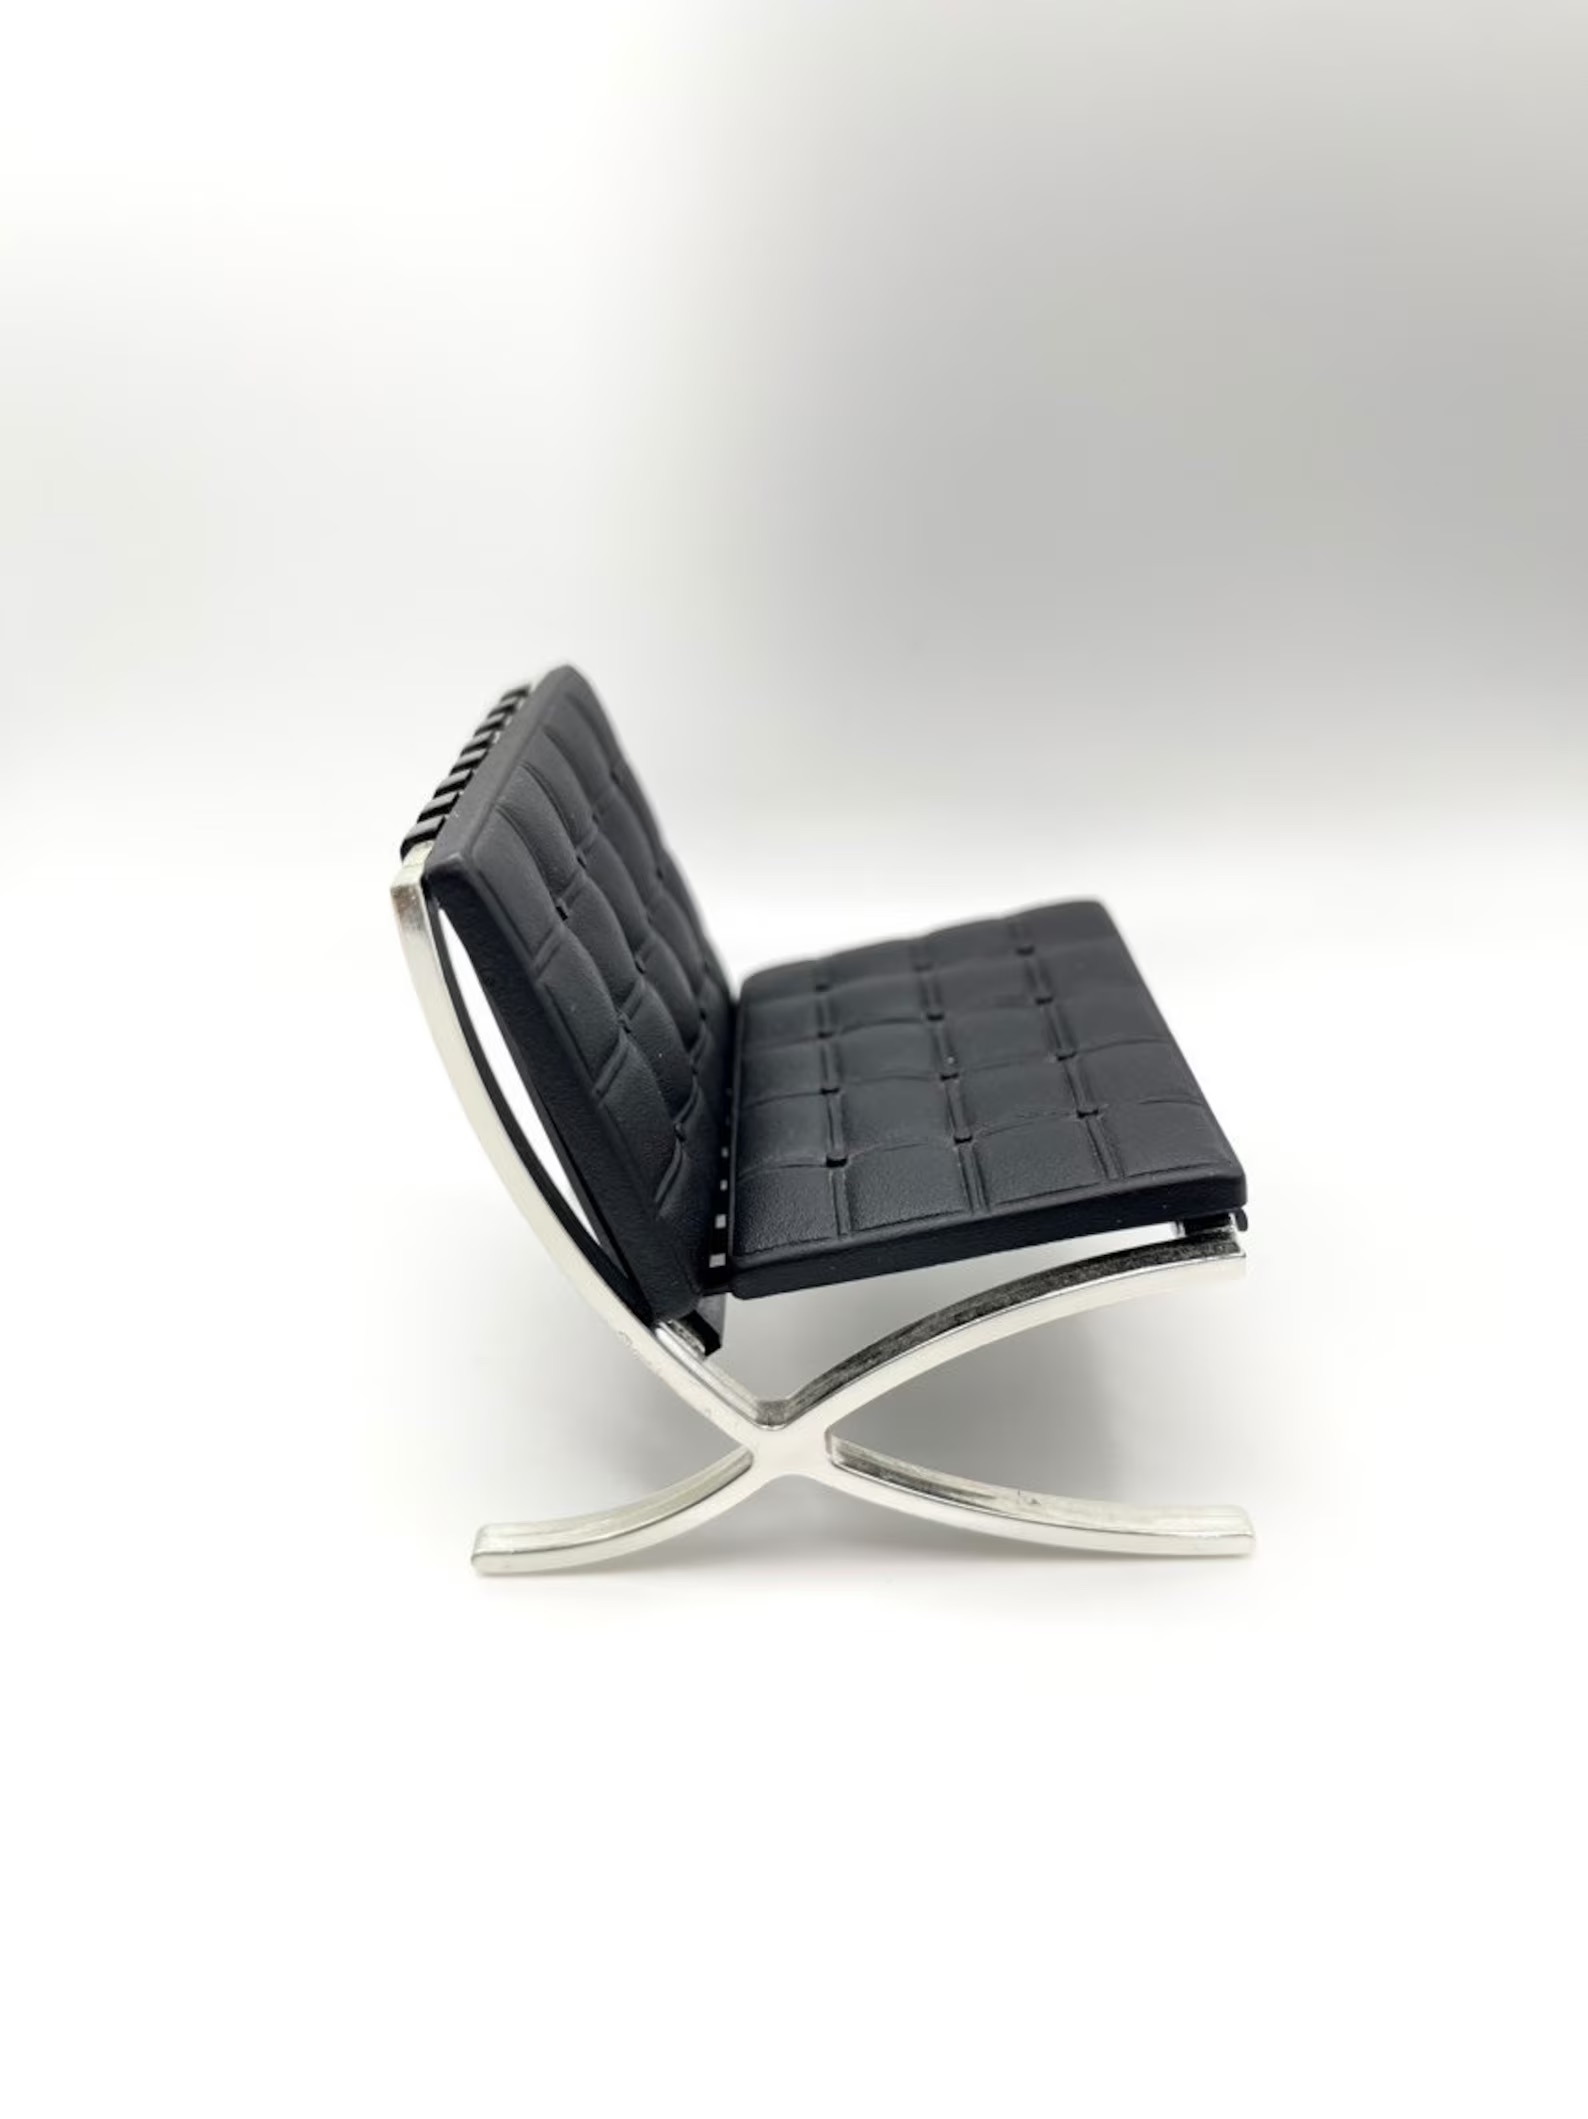 Barcelona Chair Desk Display Model - Image 2 of 5